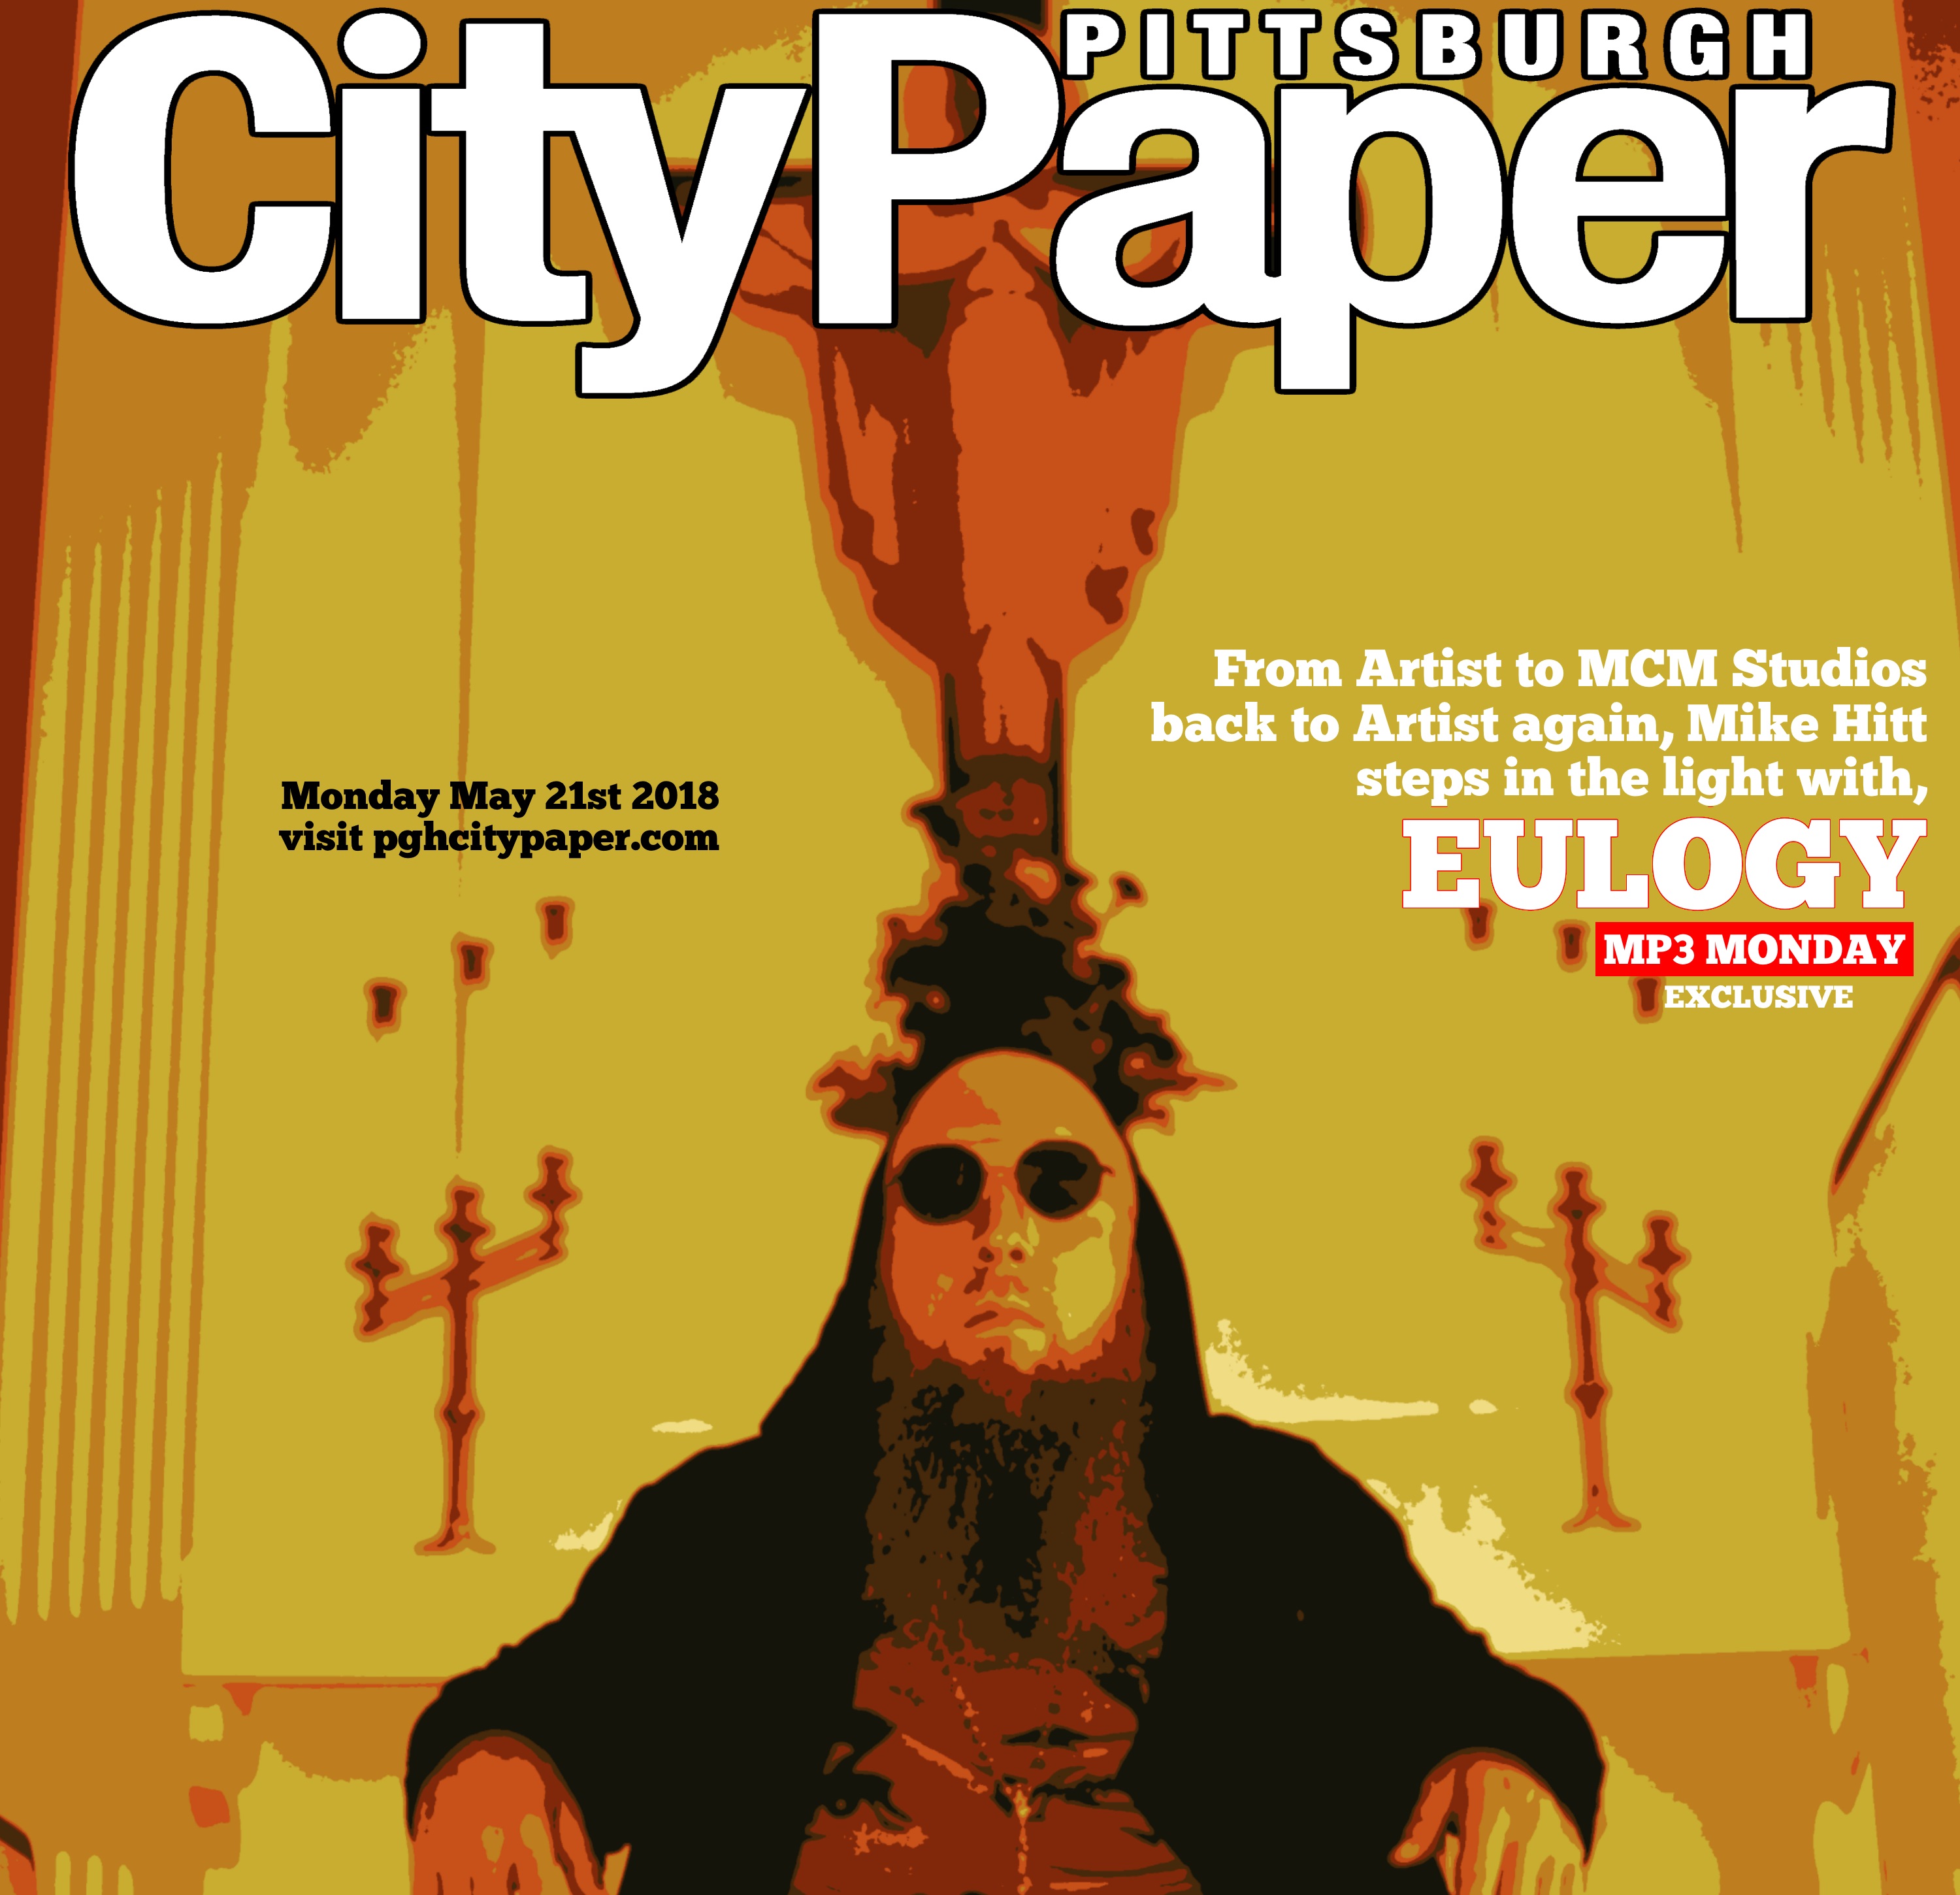 City Paper Release Image.jpg